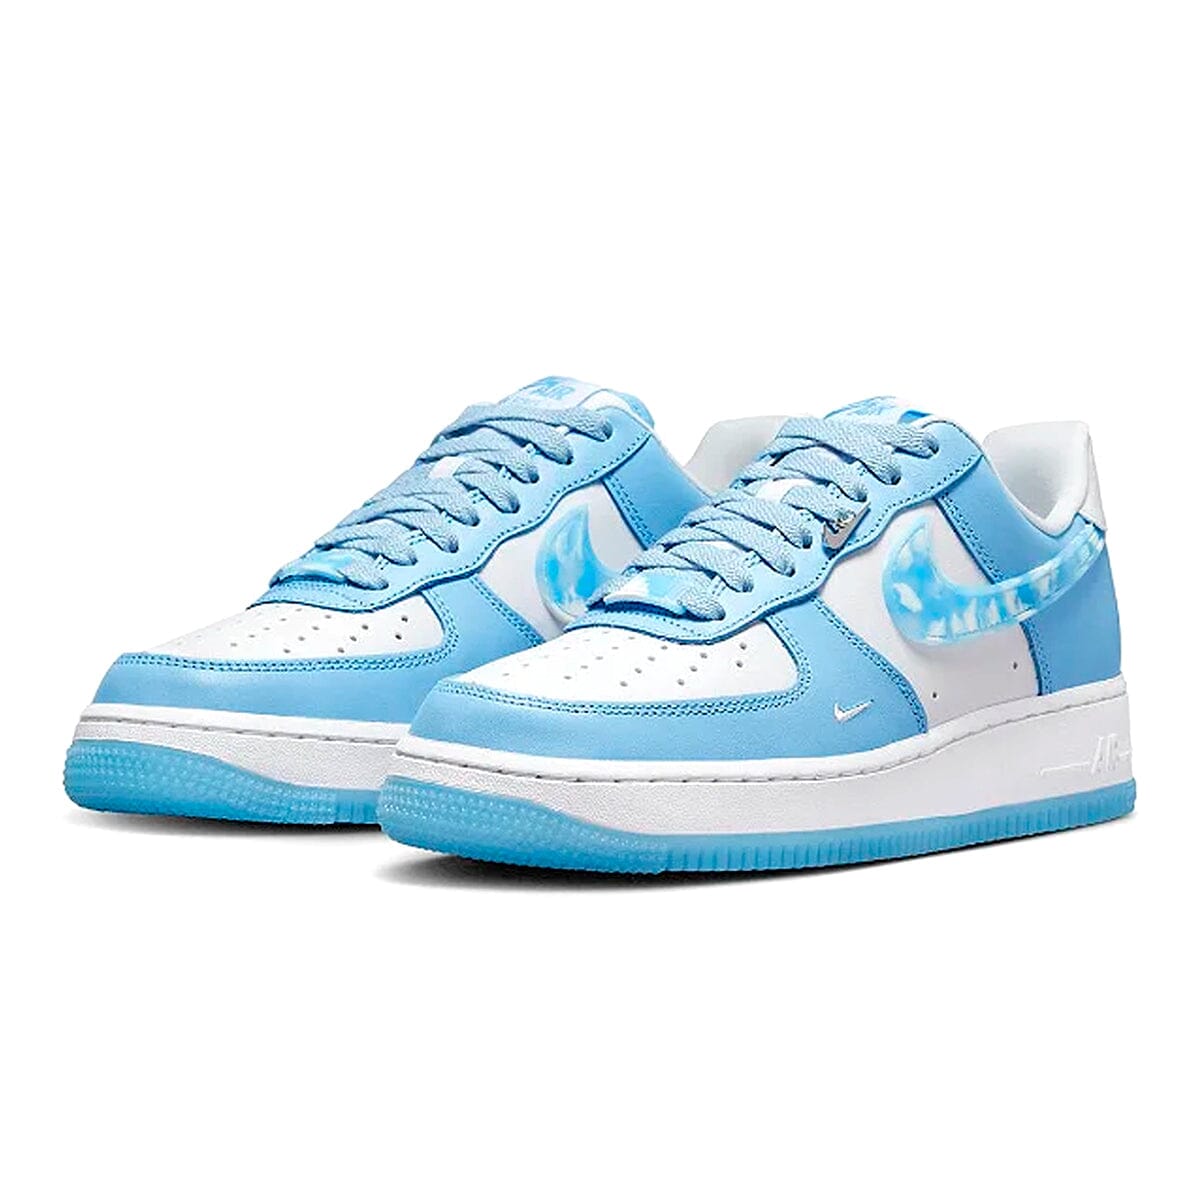 Nike Air Force 1 Low Nail Art White Blue Blizz Sneakers 